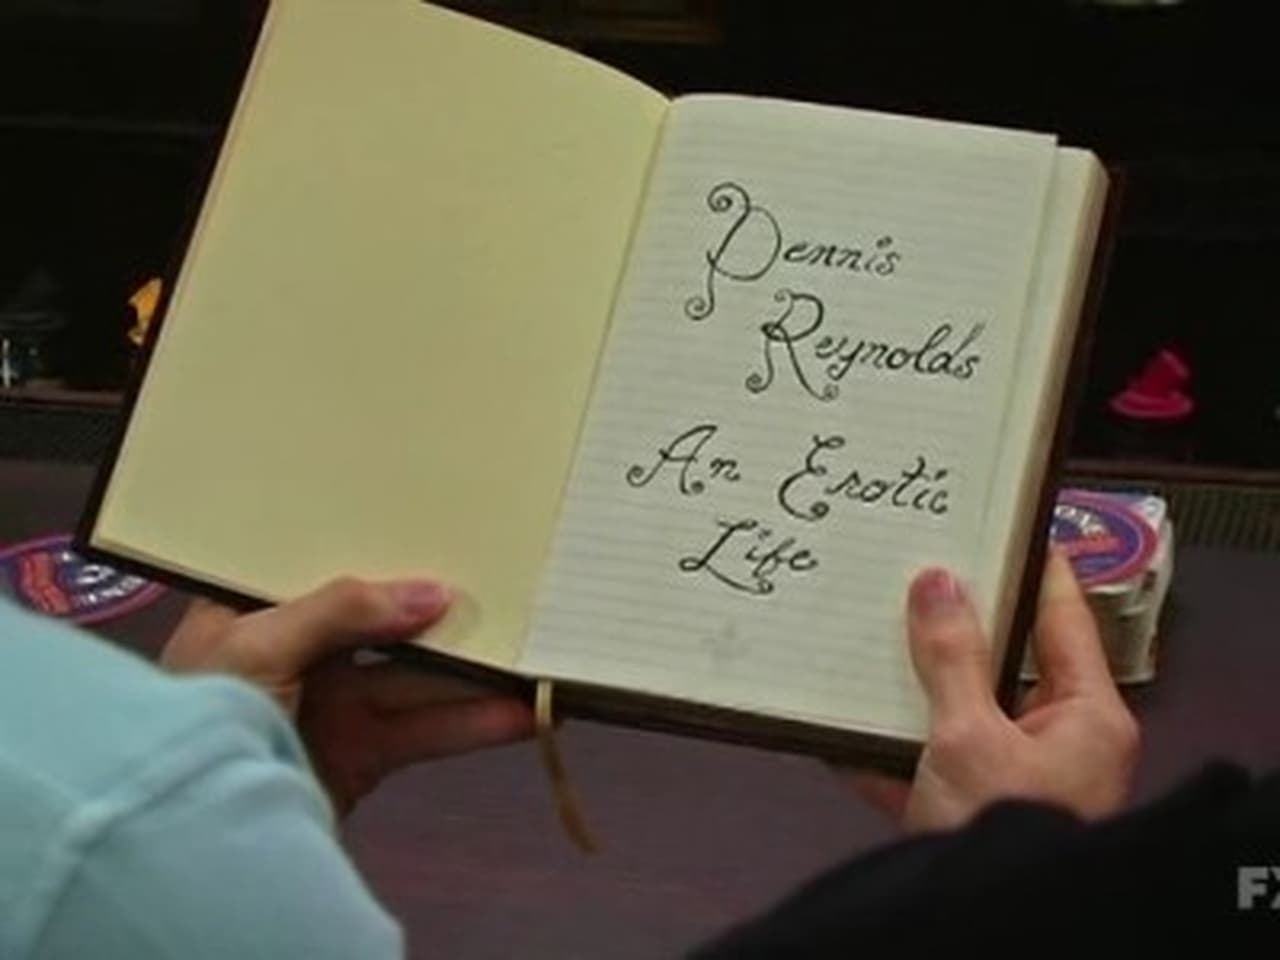 It's Always Sunny in Philadelphia - Season 4 Episode 9 : Dennis Reynolds: An Erotic Life